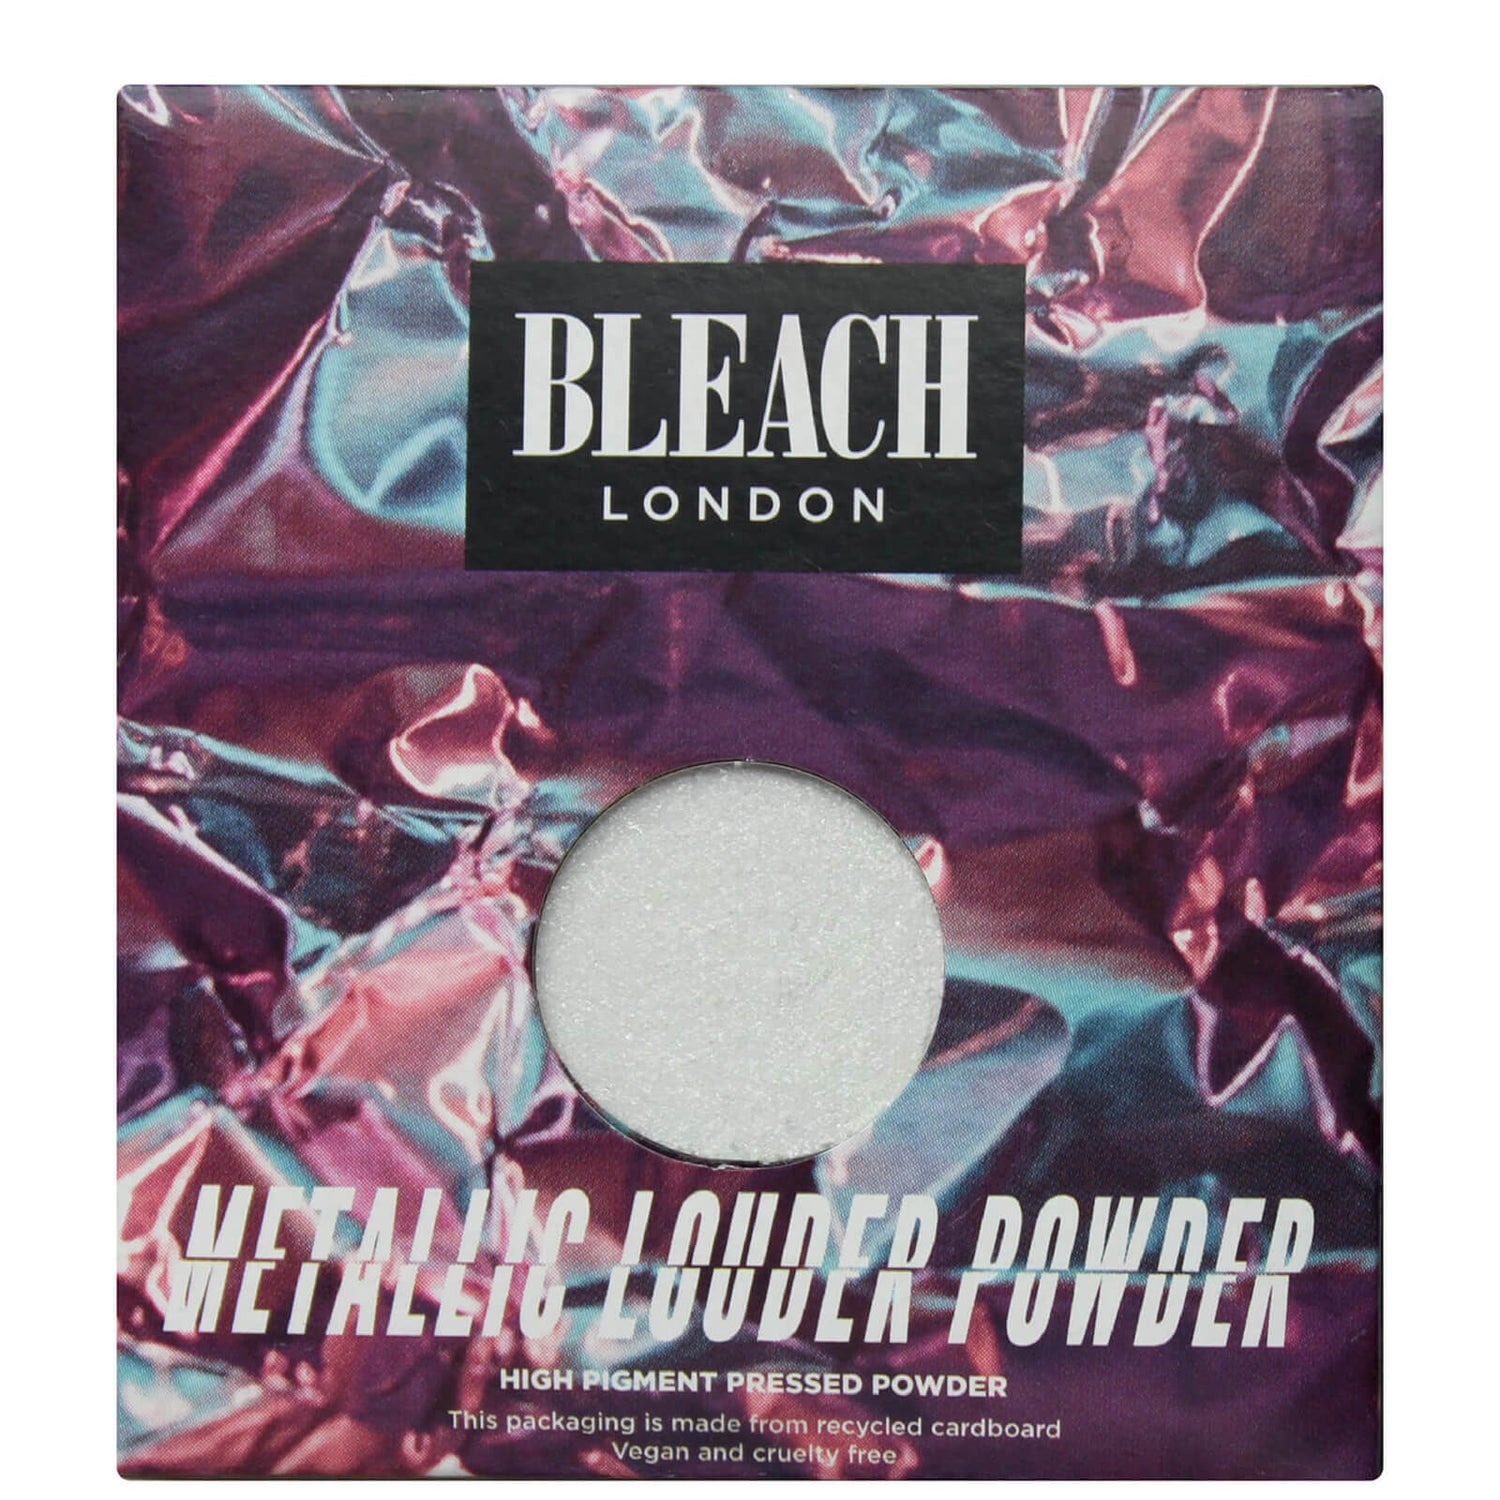 BLEACH LONDON Metallic Louder Powder ombretto P1 Me